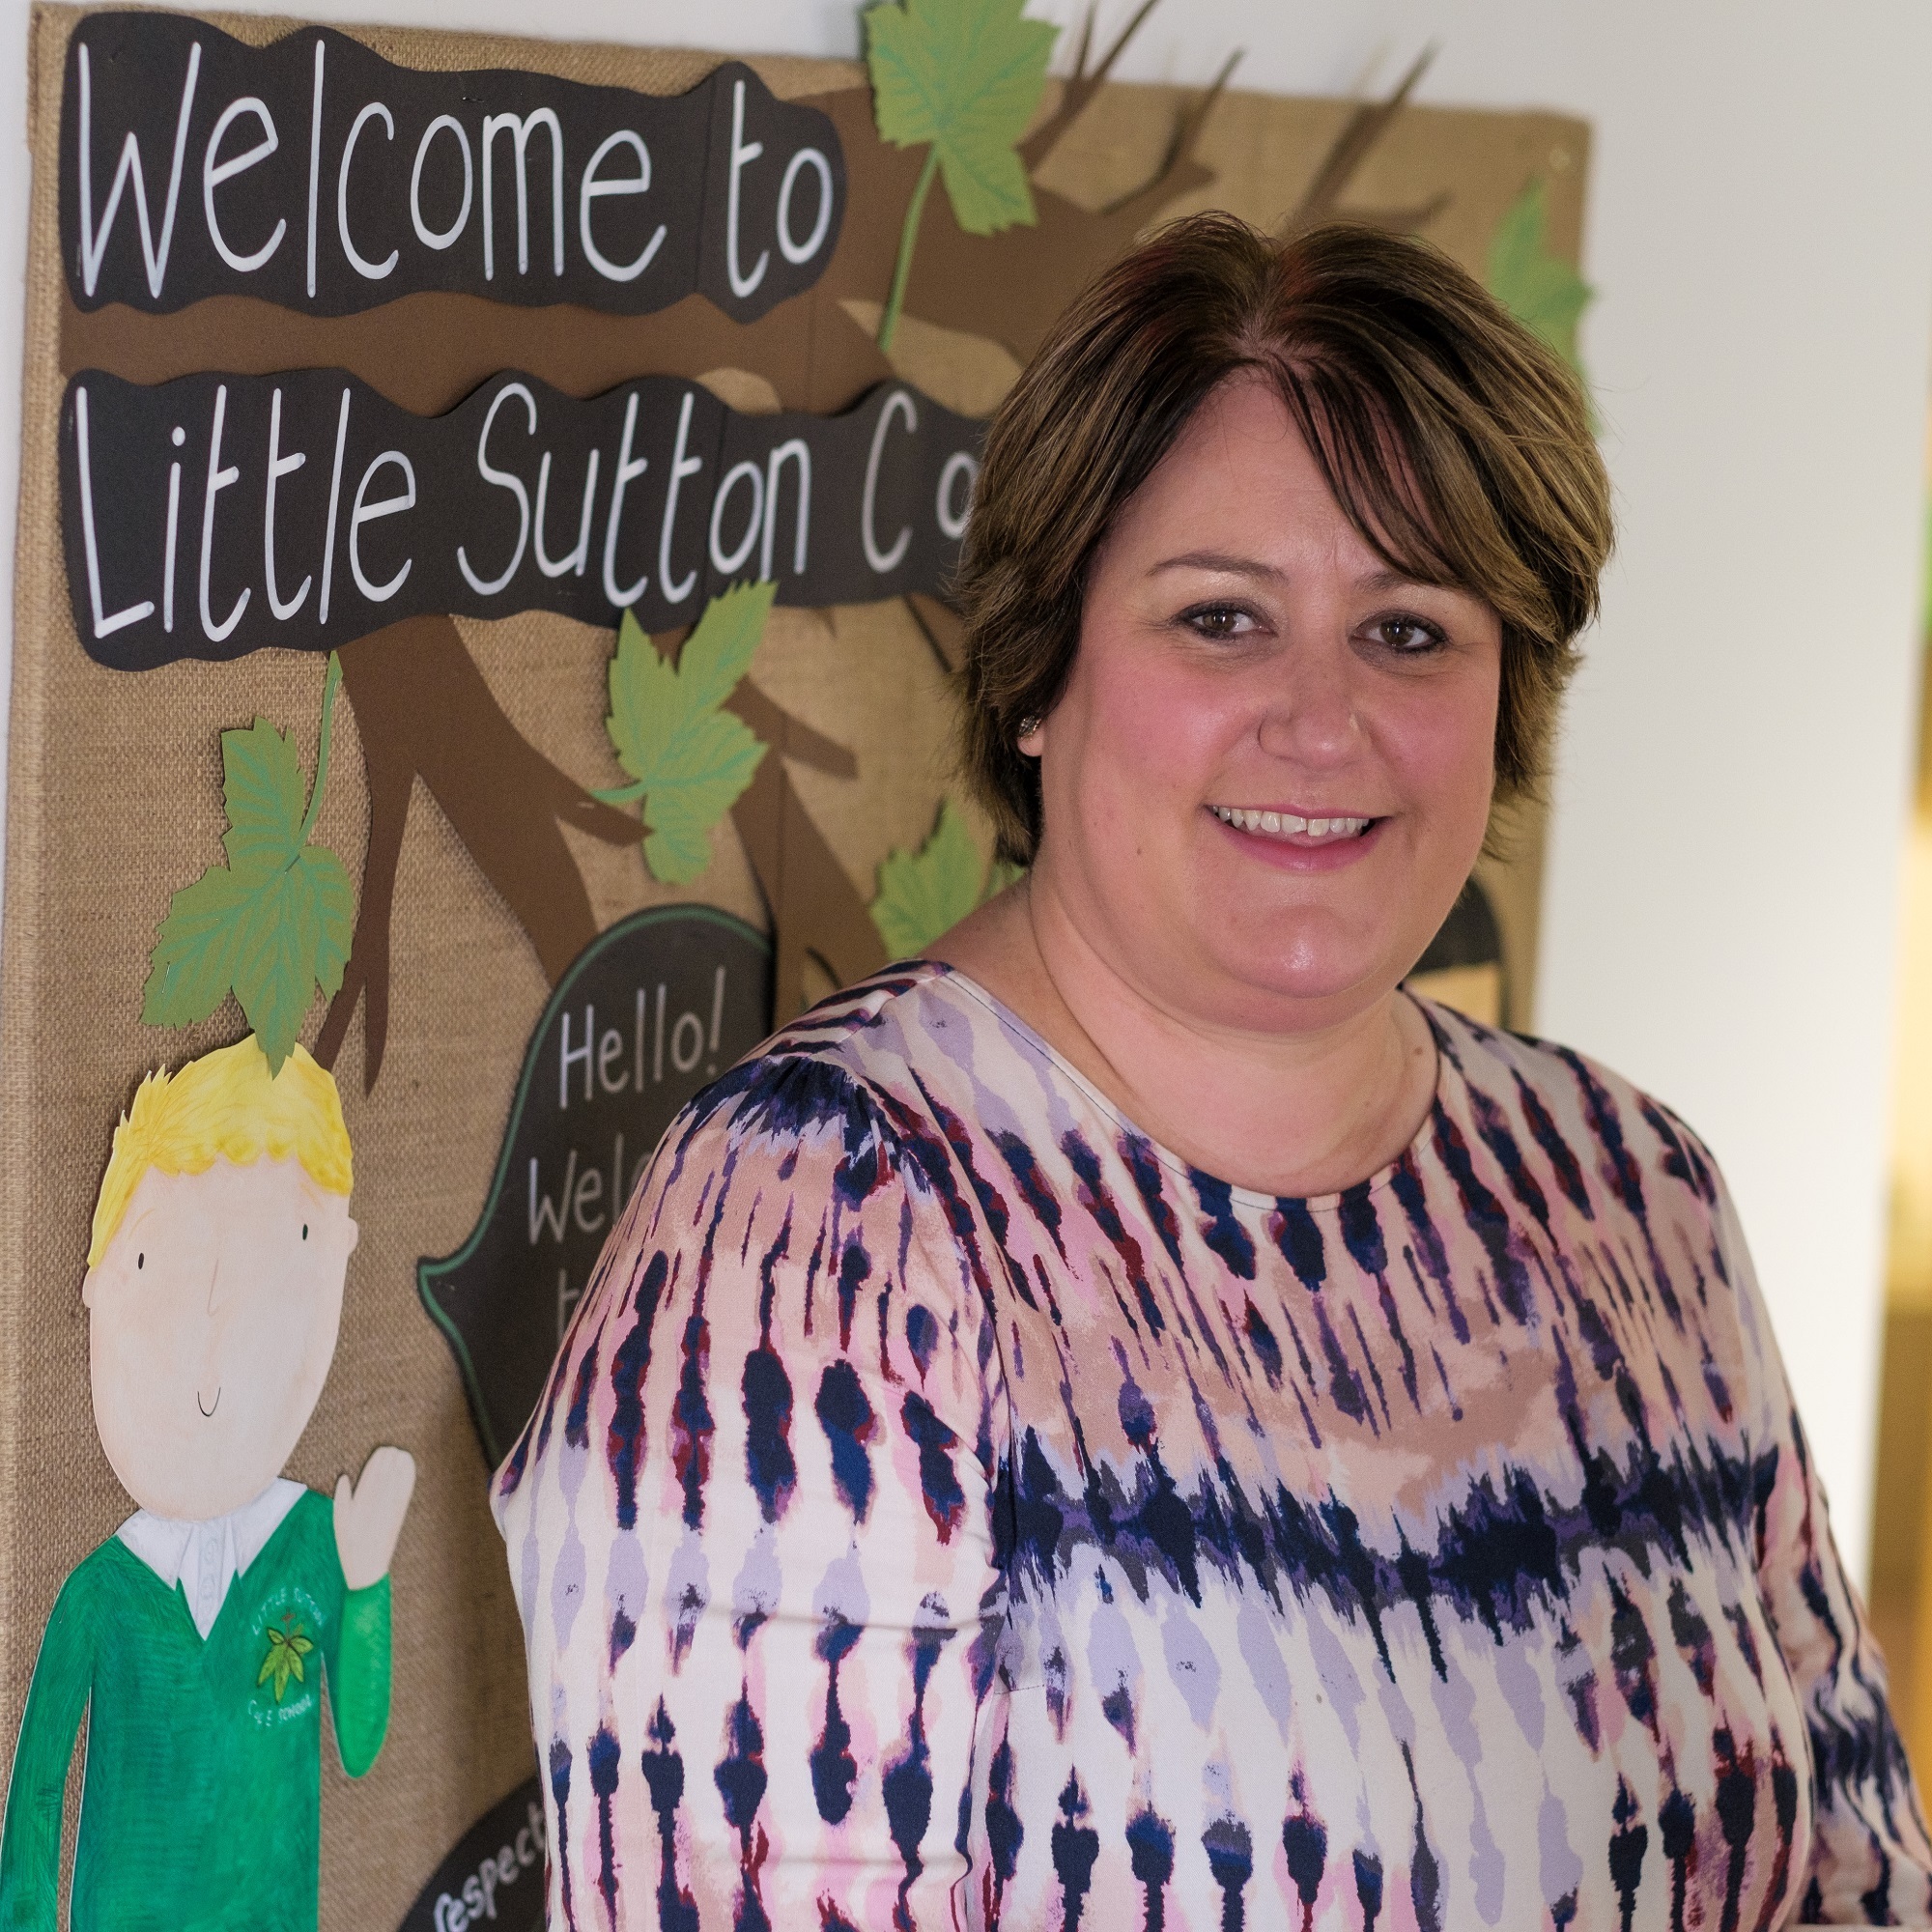 Zoe Carciero is the headteacher of Little Sutton C of E Primary School